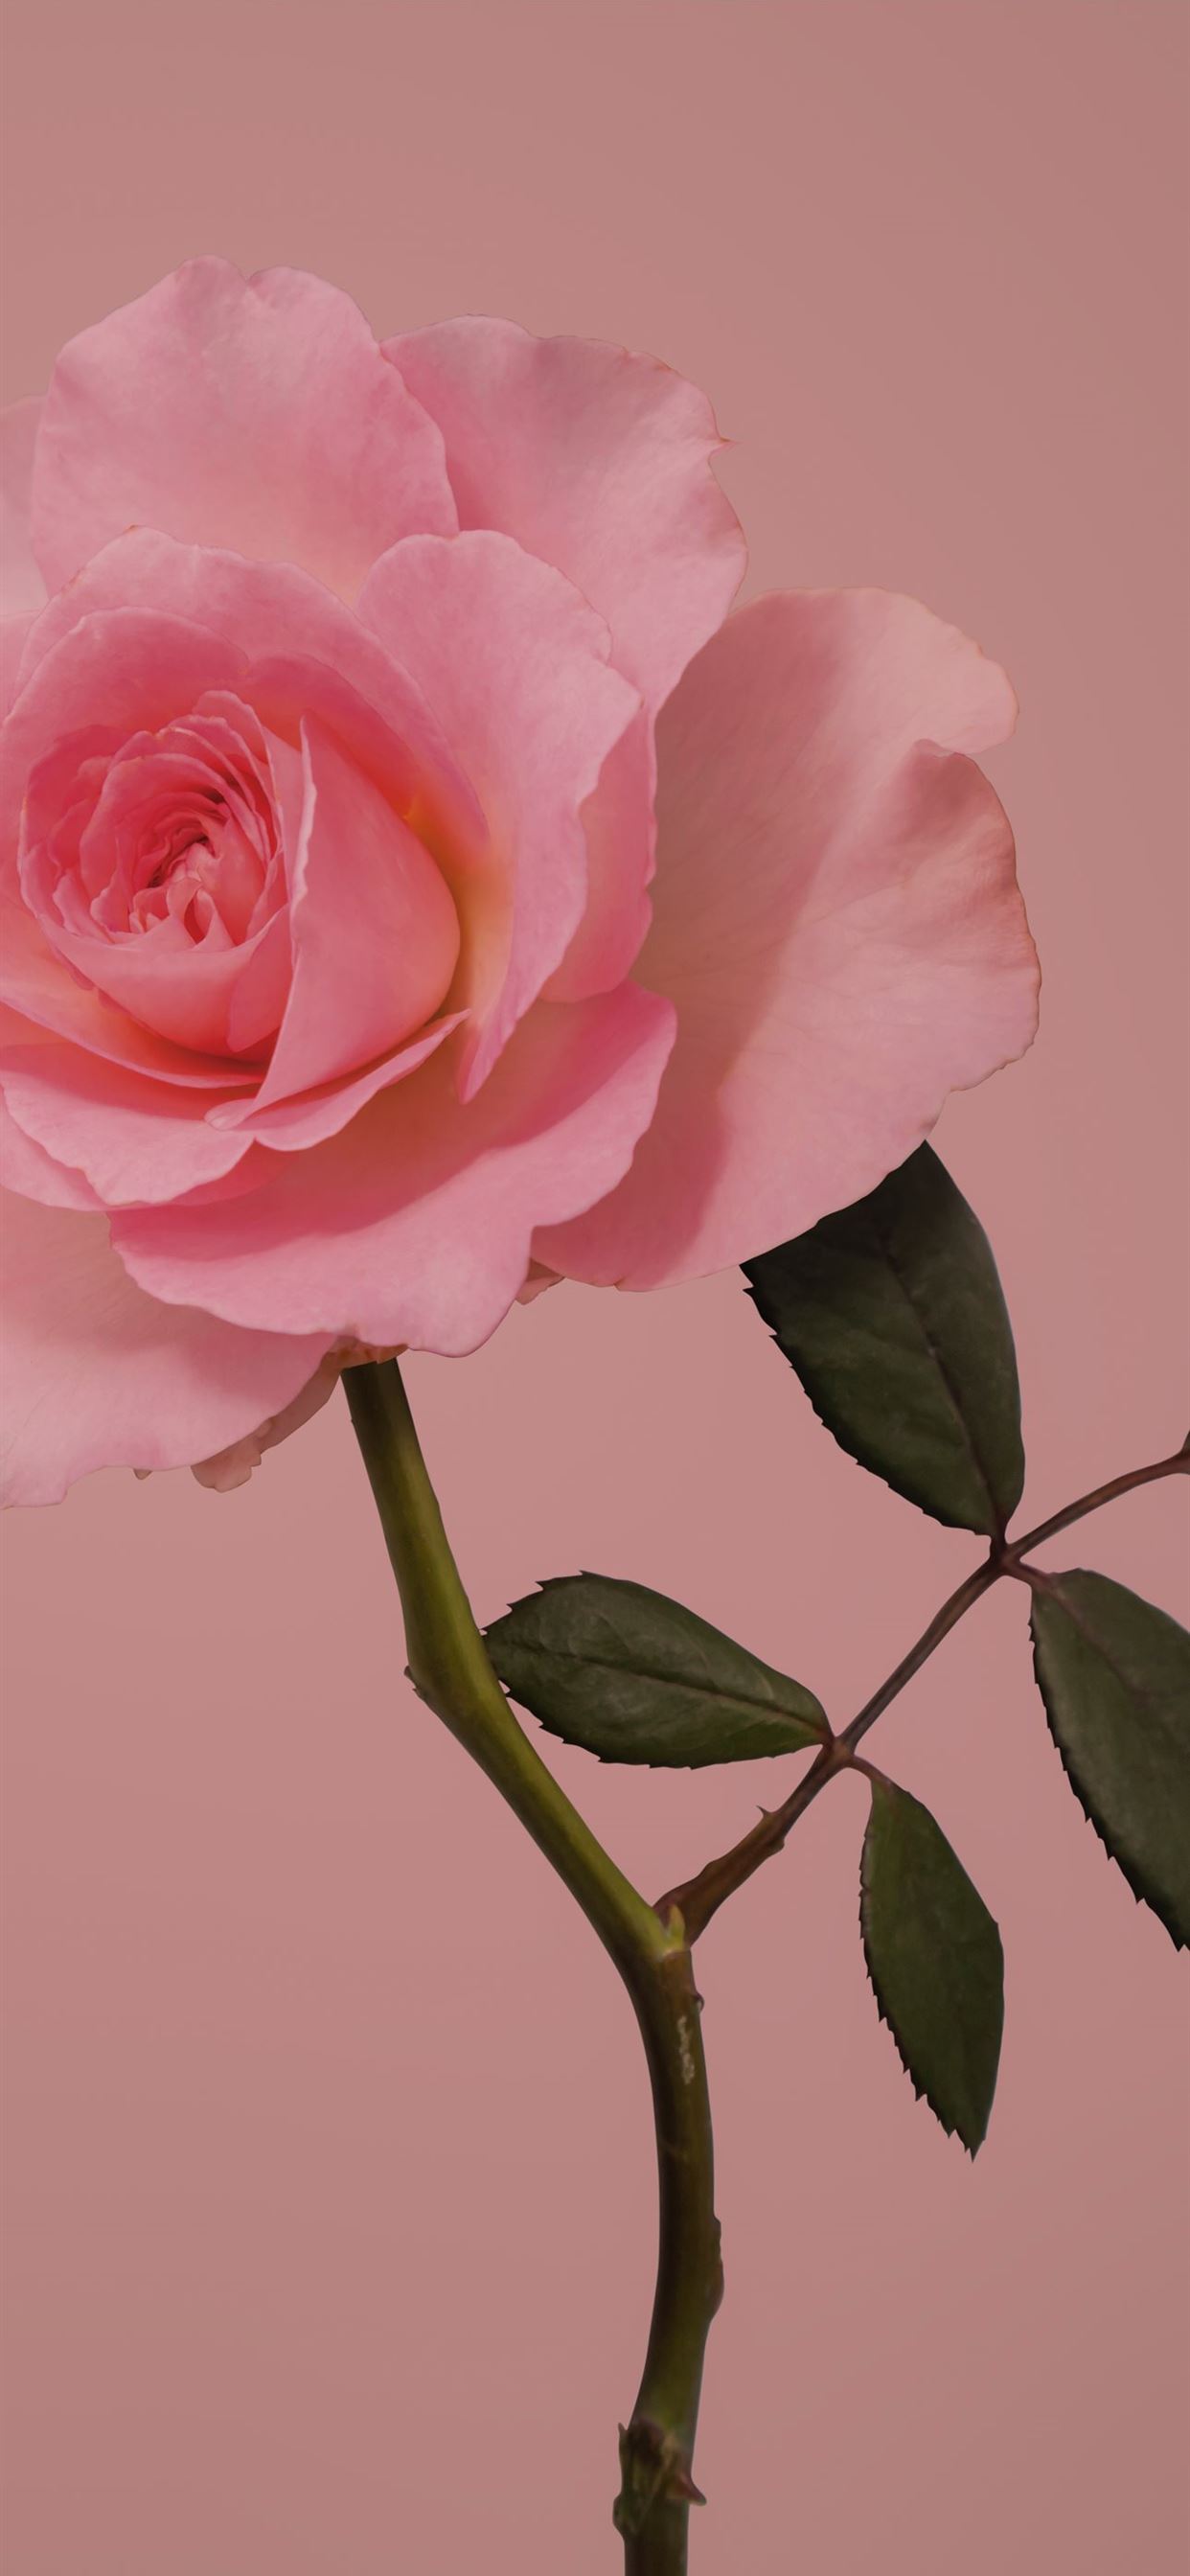 HD wallpaper: closeup photo of pink roses, Rosy, Taiwan, Taipei, Canon EOS  5D Mark II | Wallpaper Flare